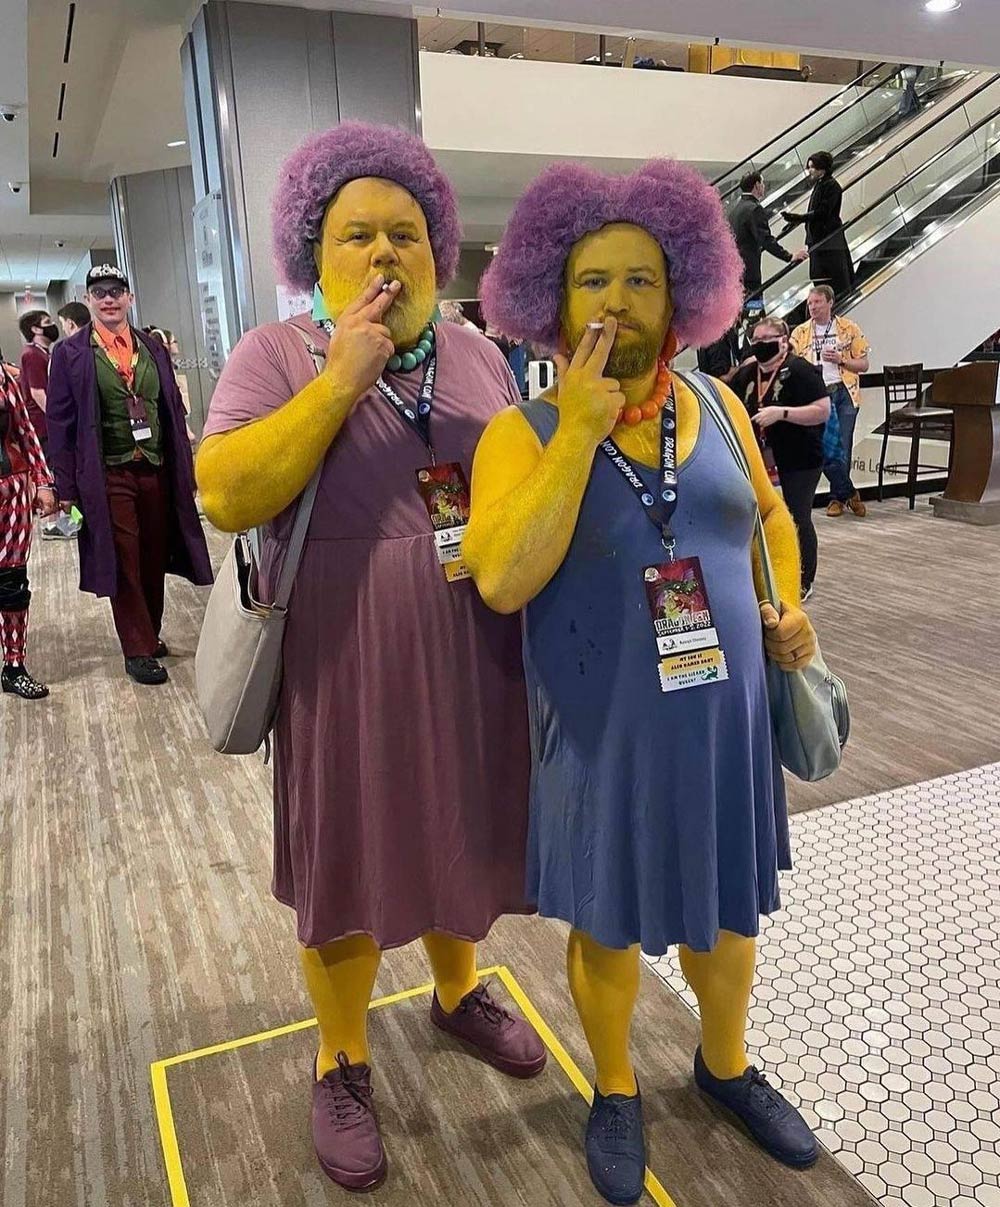 Patty and Selma Comic Con